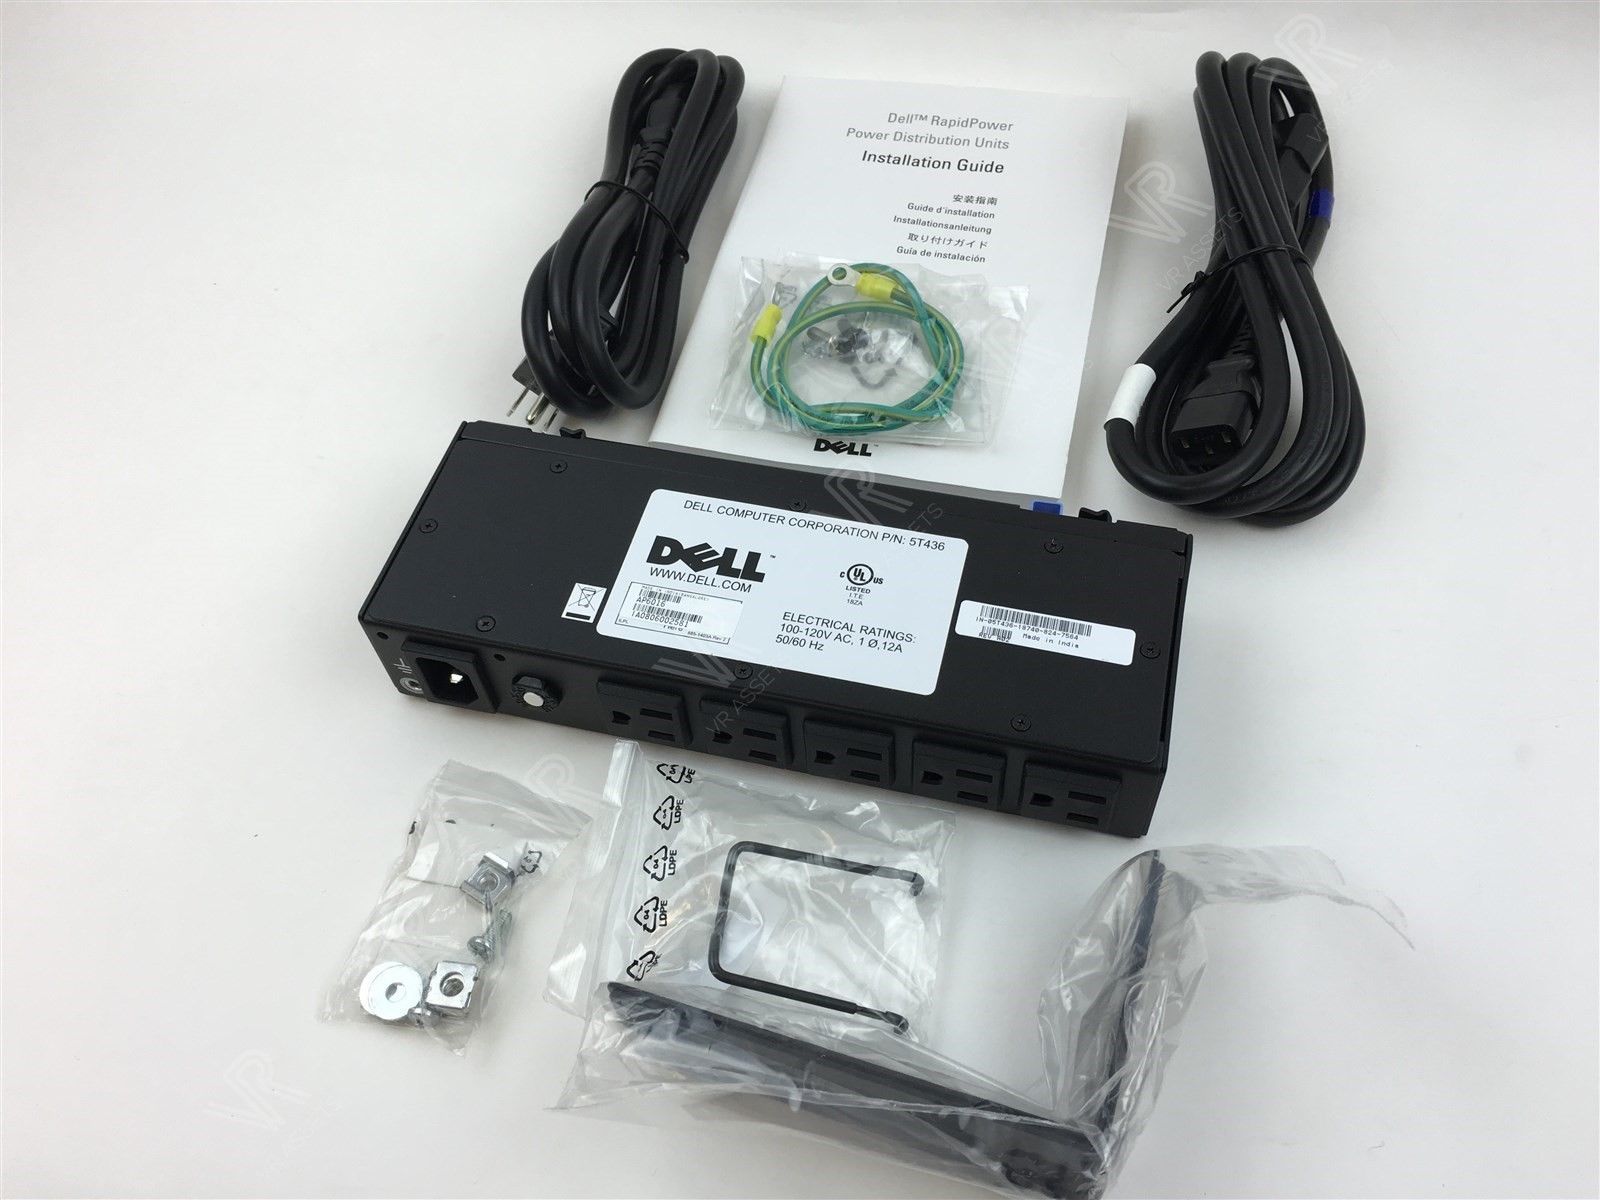 Genuine Dell Power Distribution Unit Kit 5 Port 100-120V 6T227 06T227